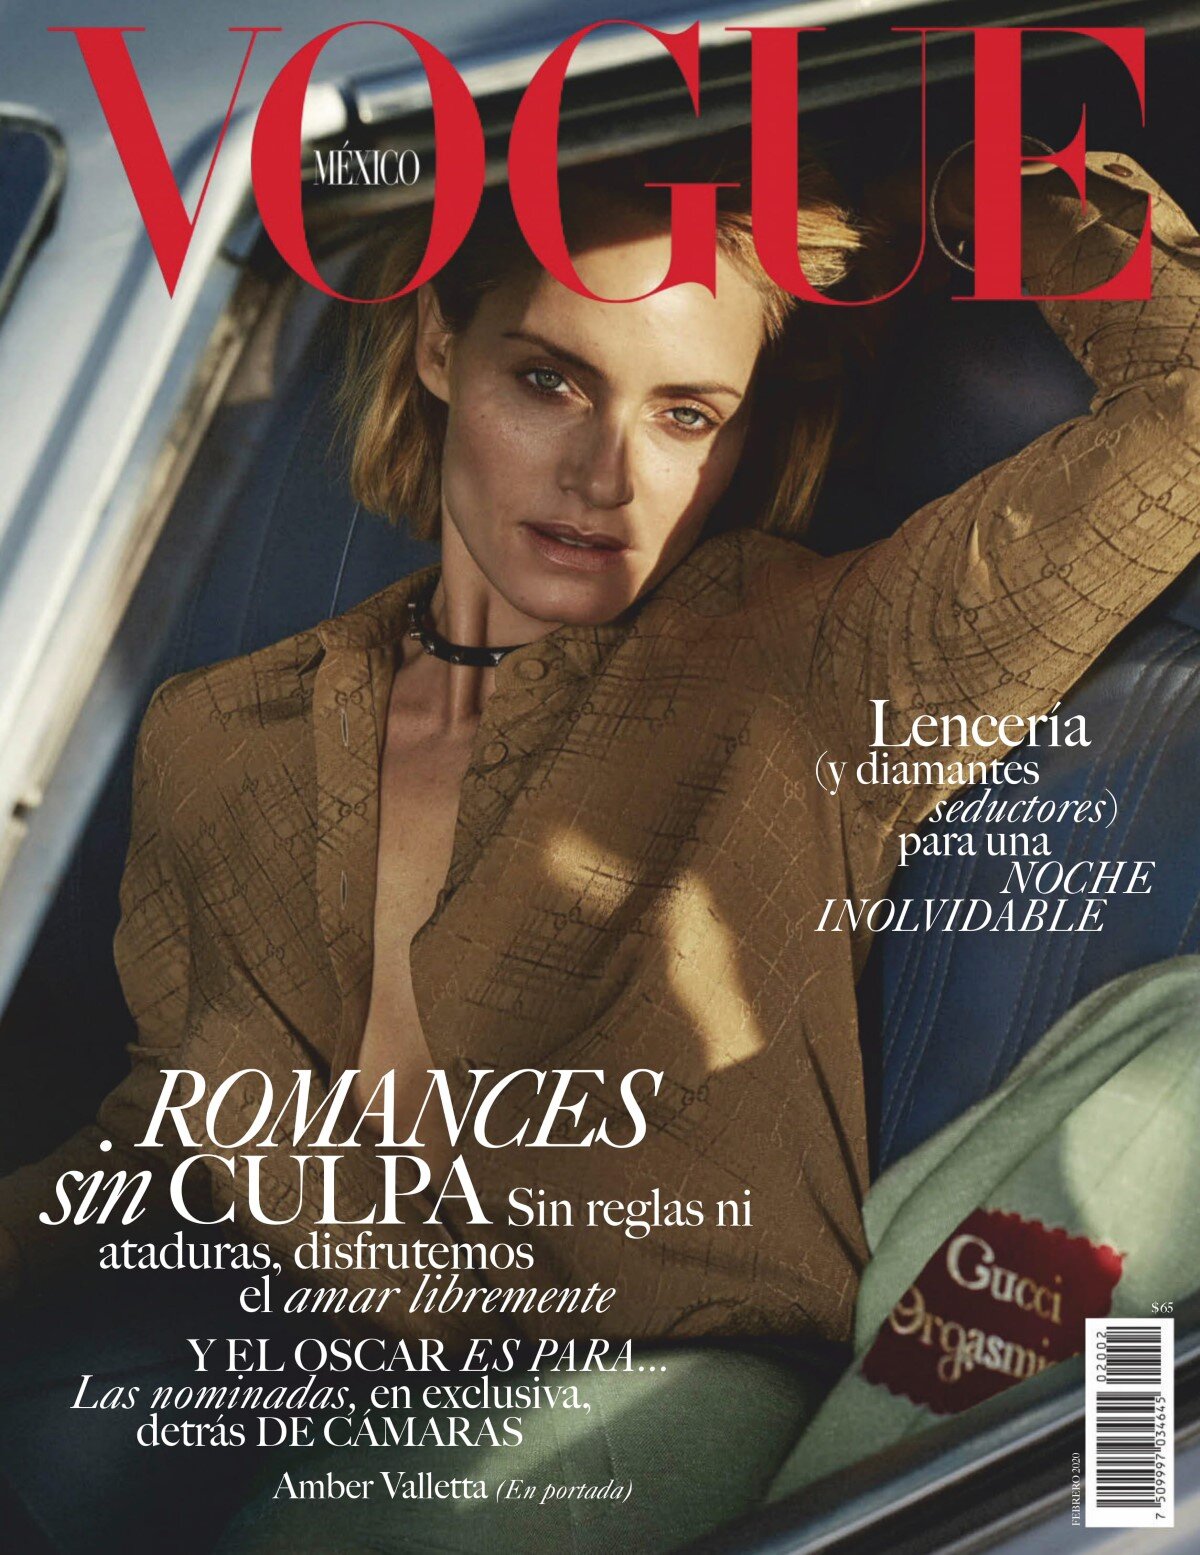 Amber Valletta by Alique for Vogue Mexico LA Feb 2020 (3).jpg